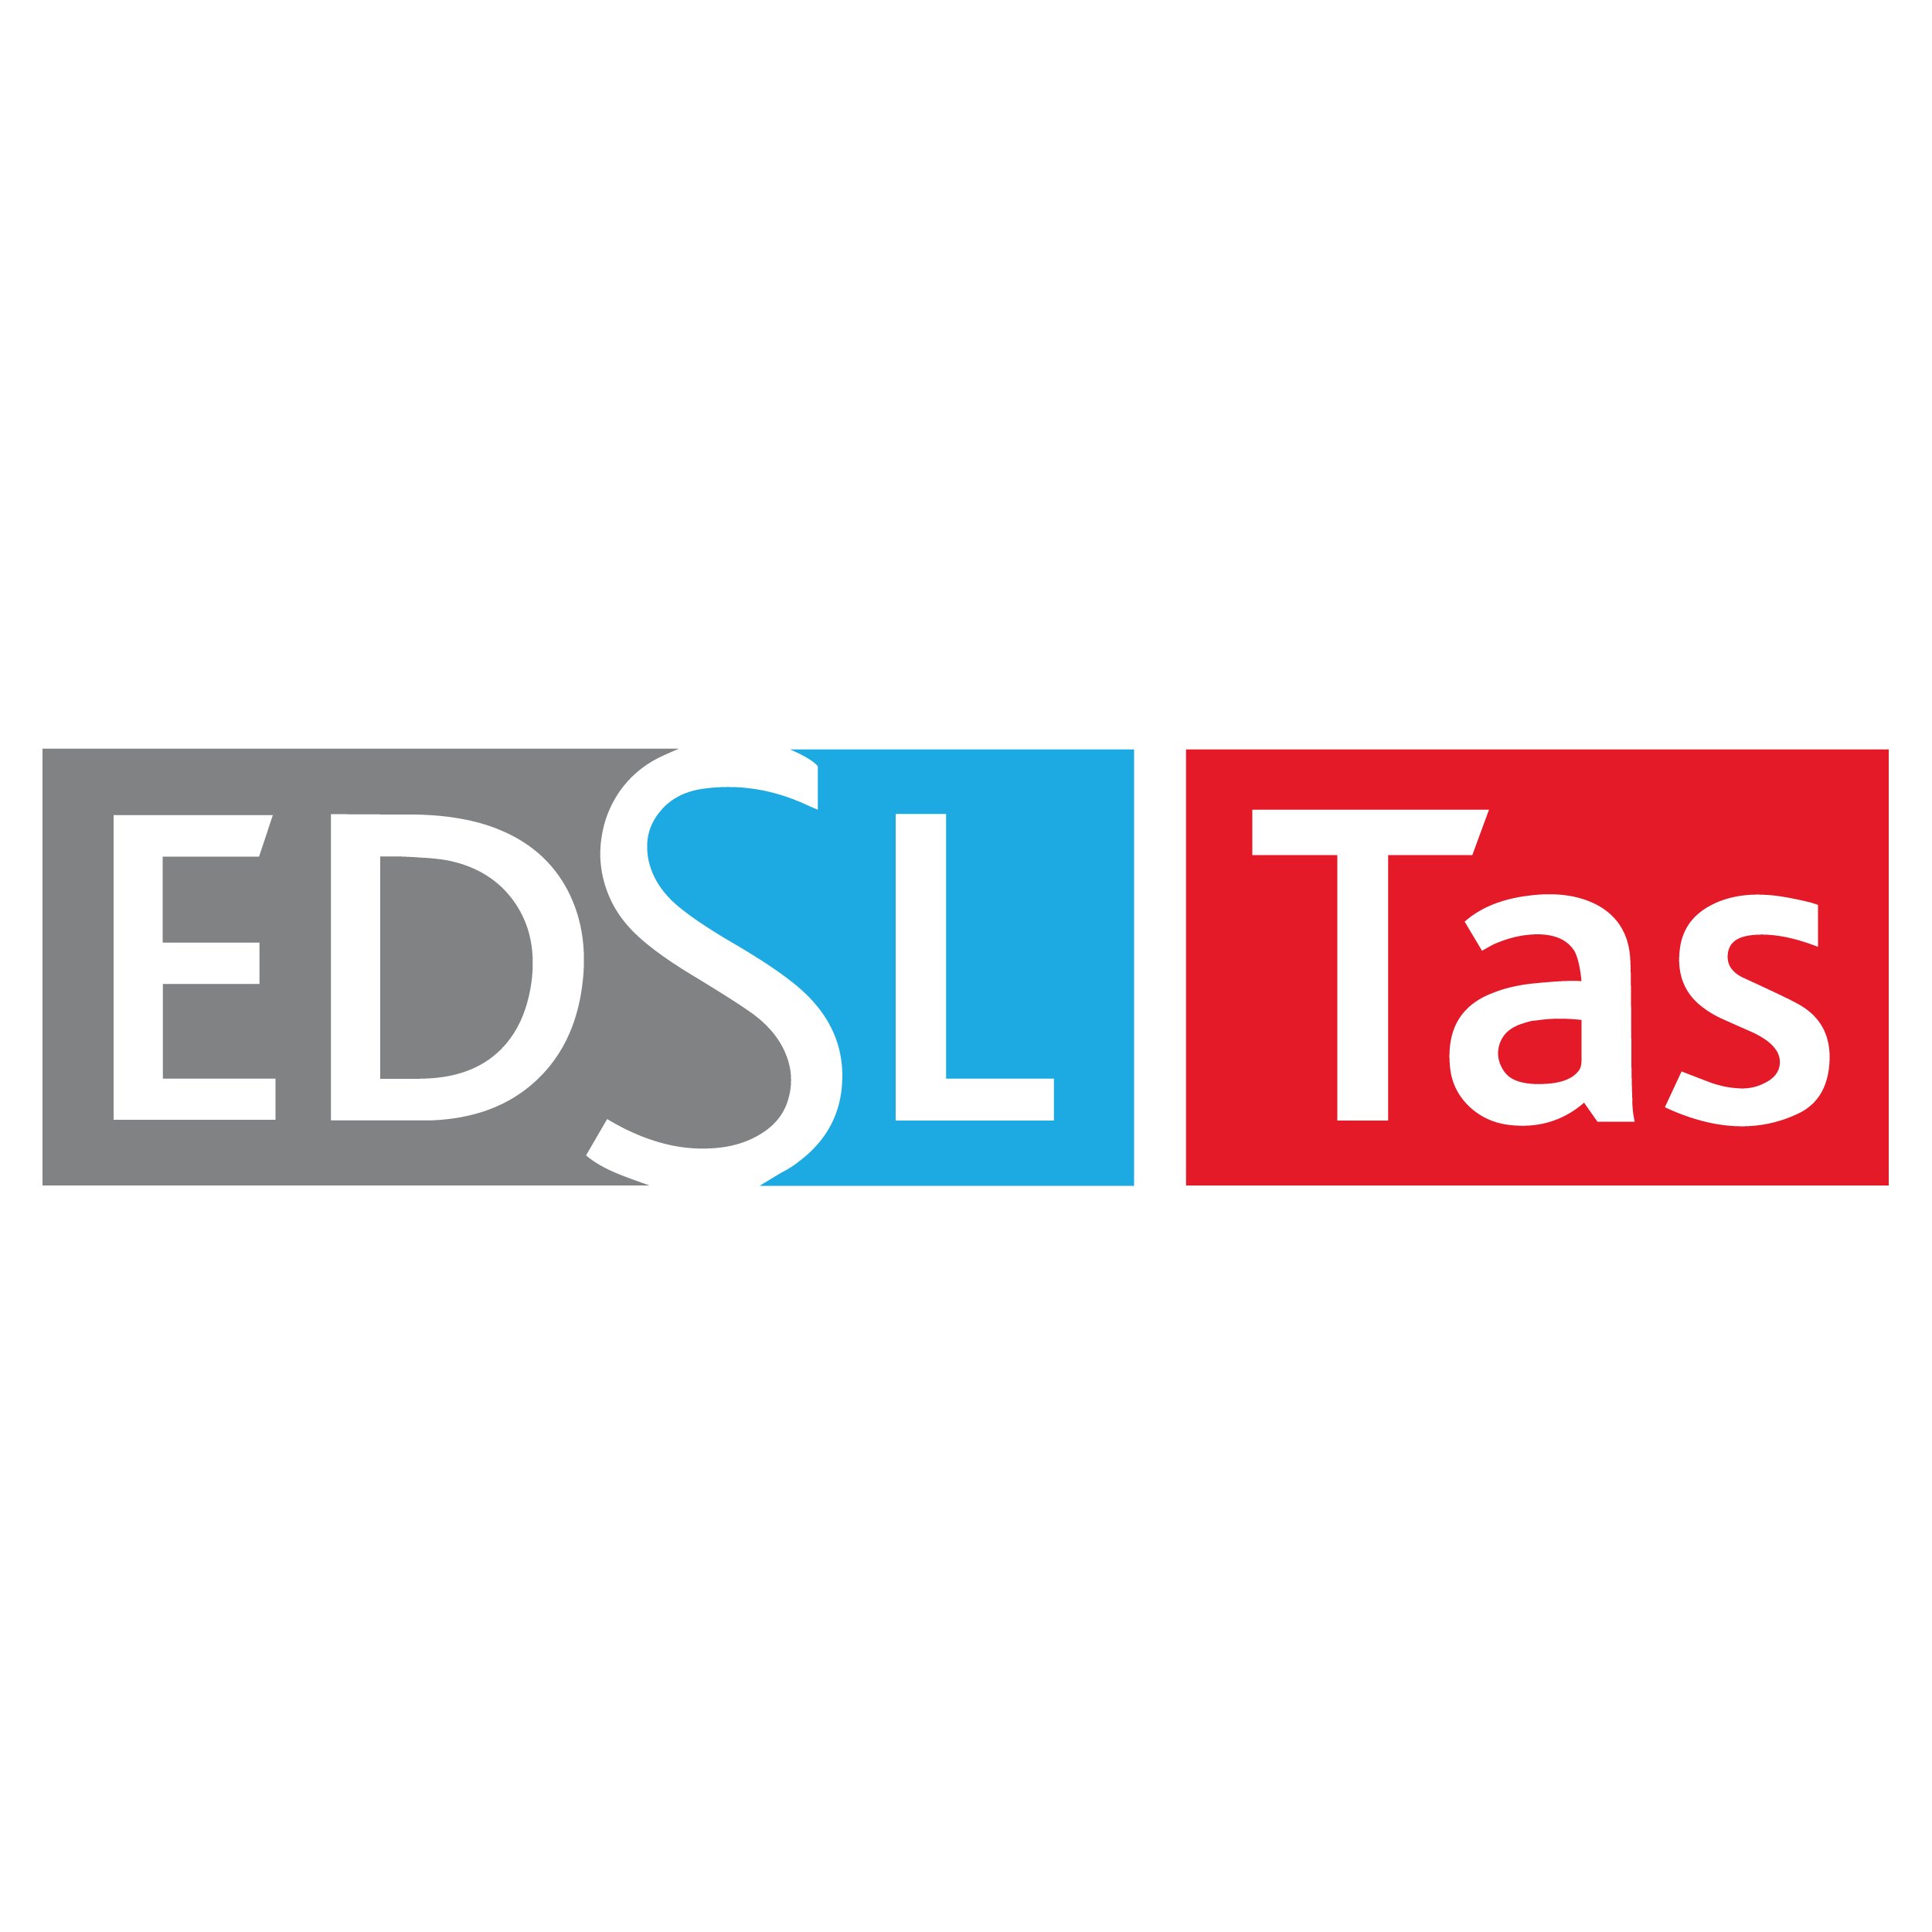 EDSL Tas logo 600x600px-02_centred-01